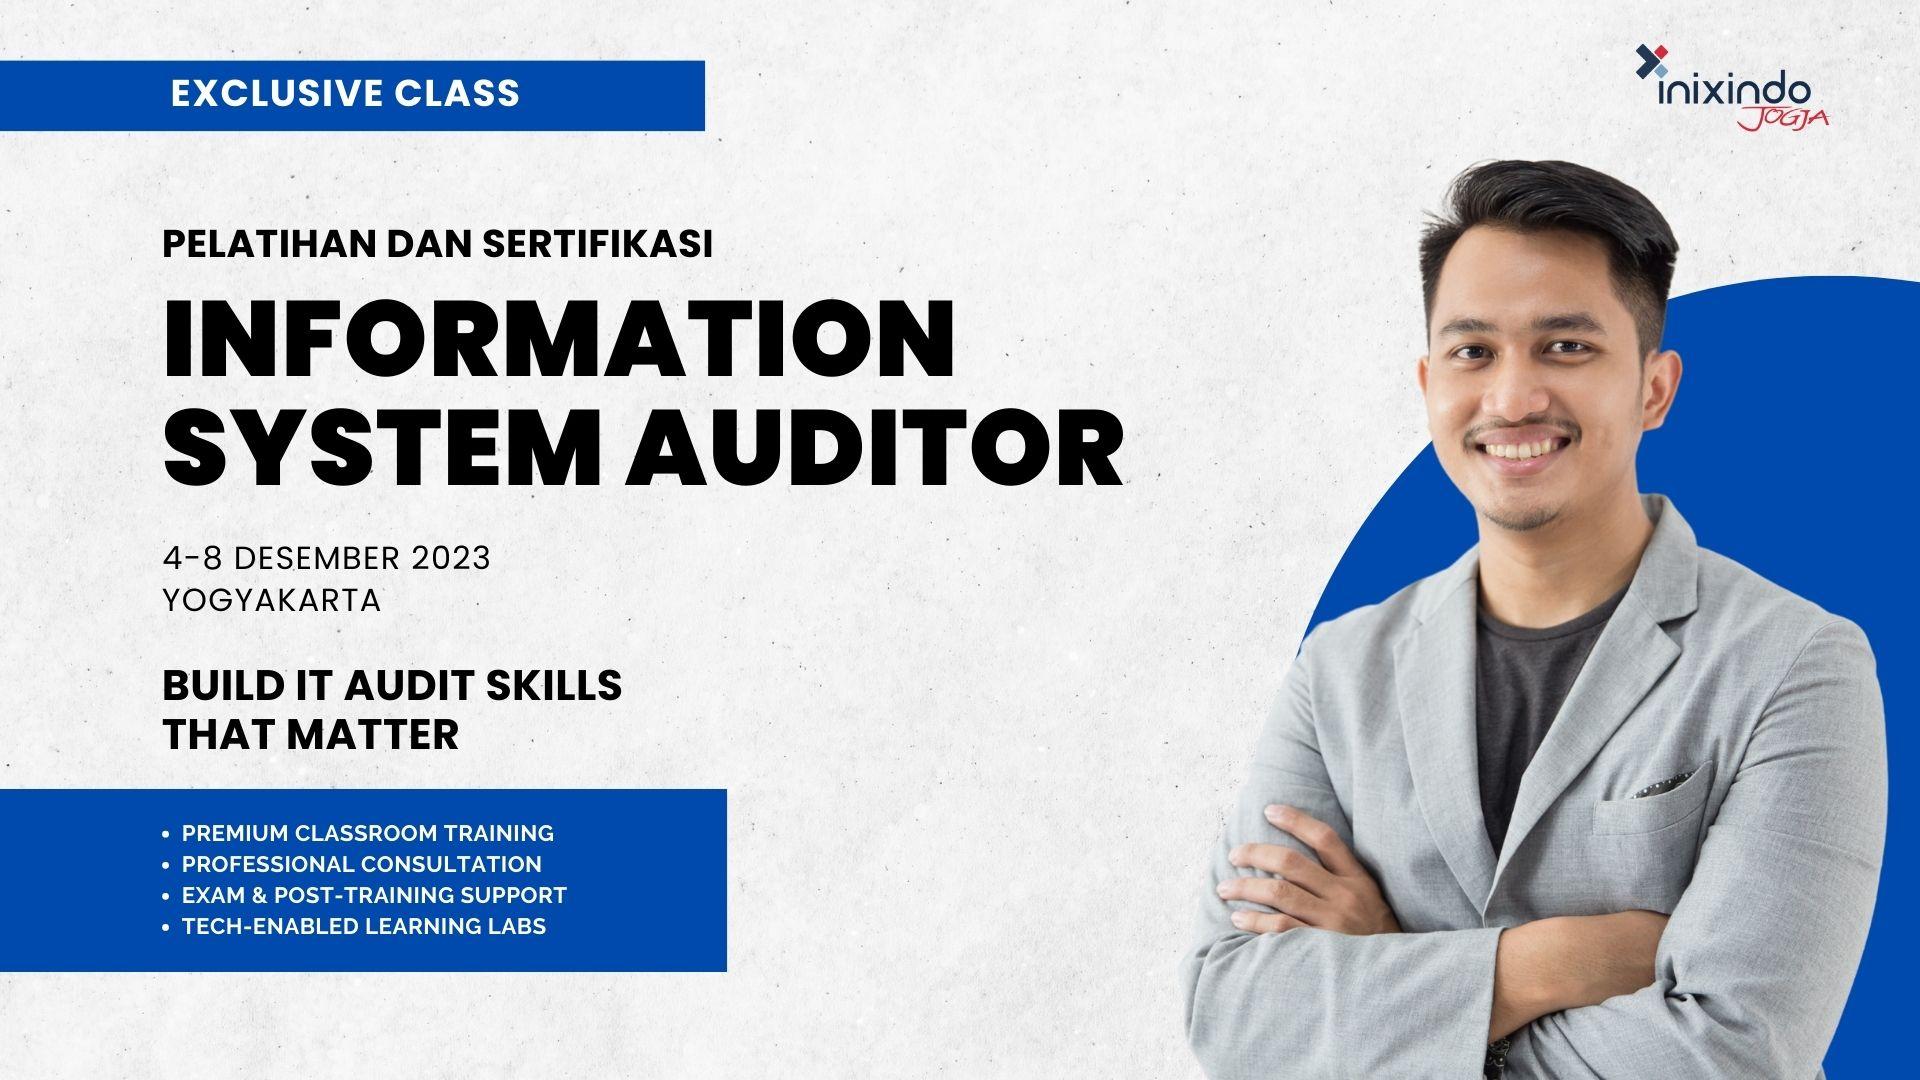 Information System Auditor Certification (CISA)